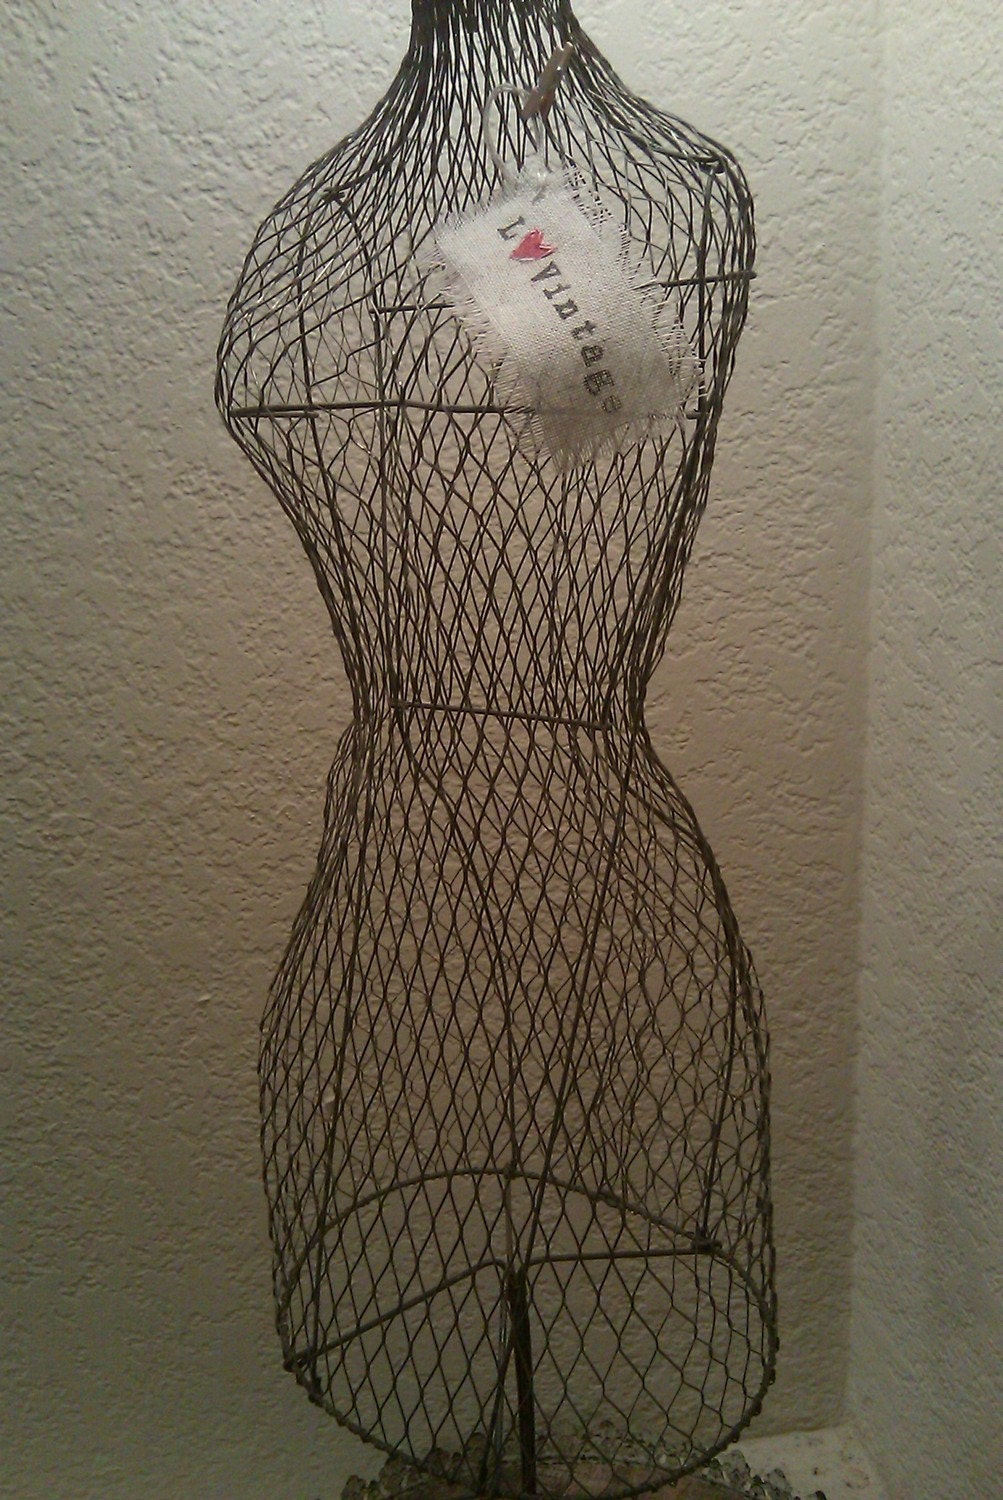 vintage-wire-dress-form-by-lovintagefinds-on-etsy